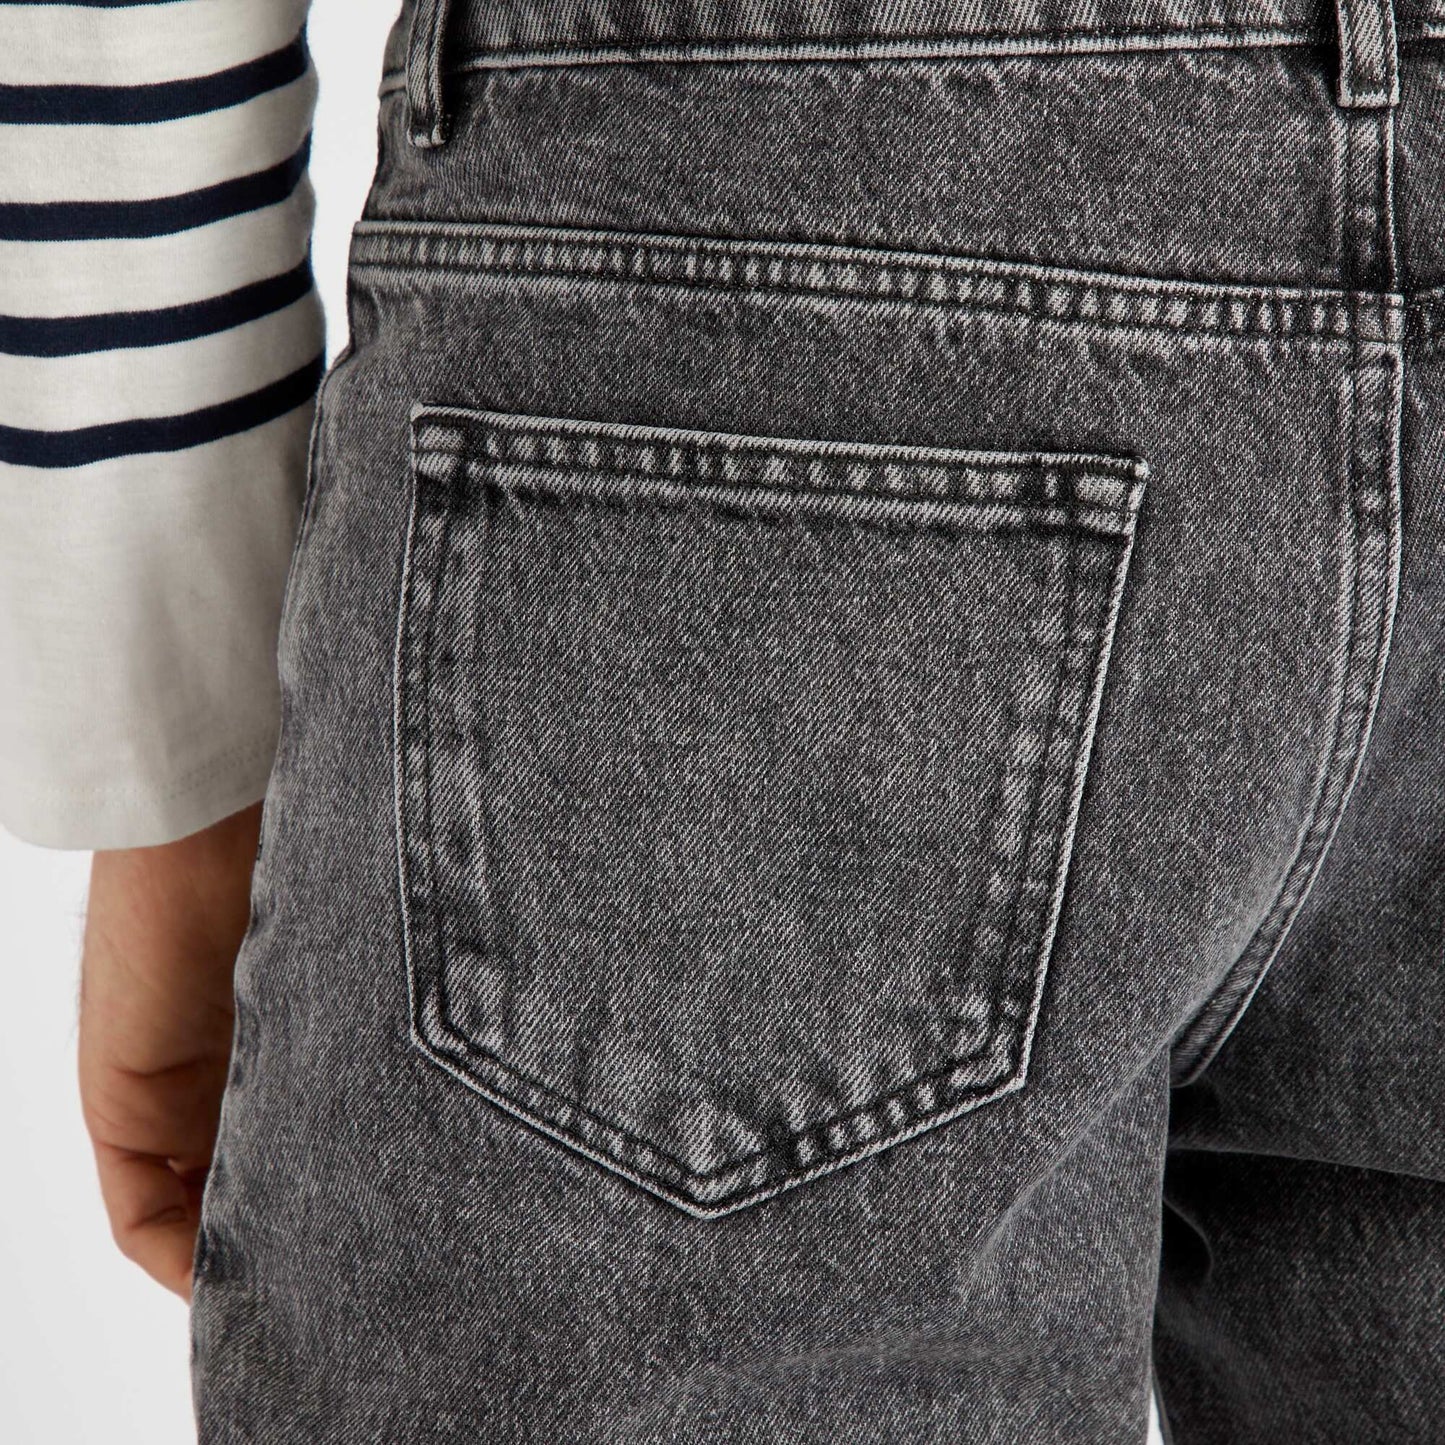 Wide-leg jeans - L32 GREY